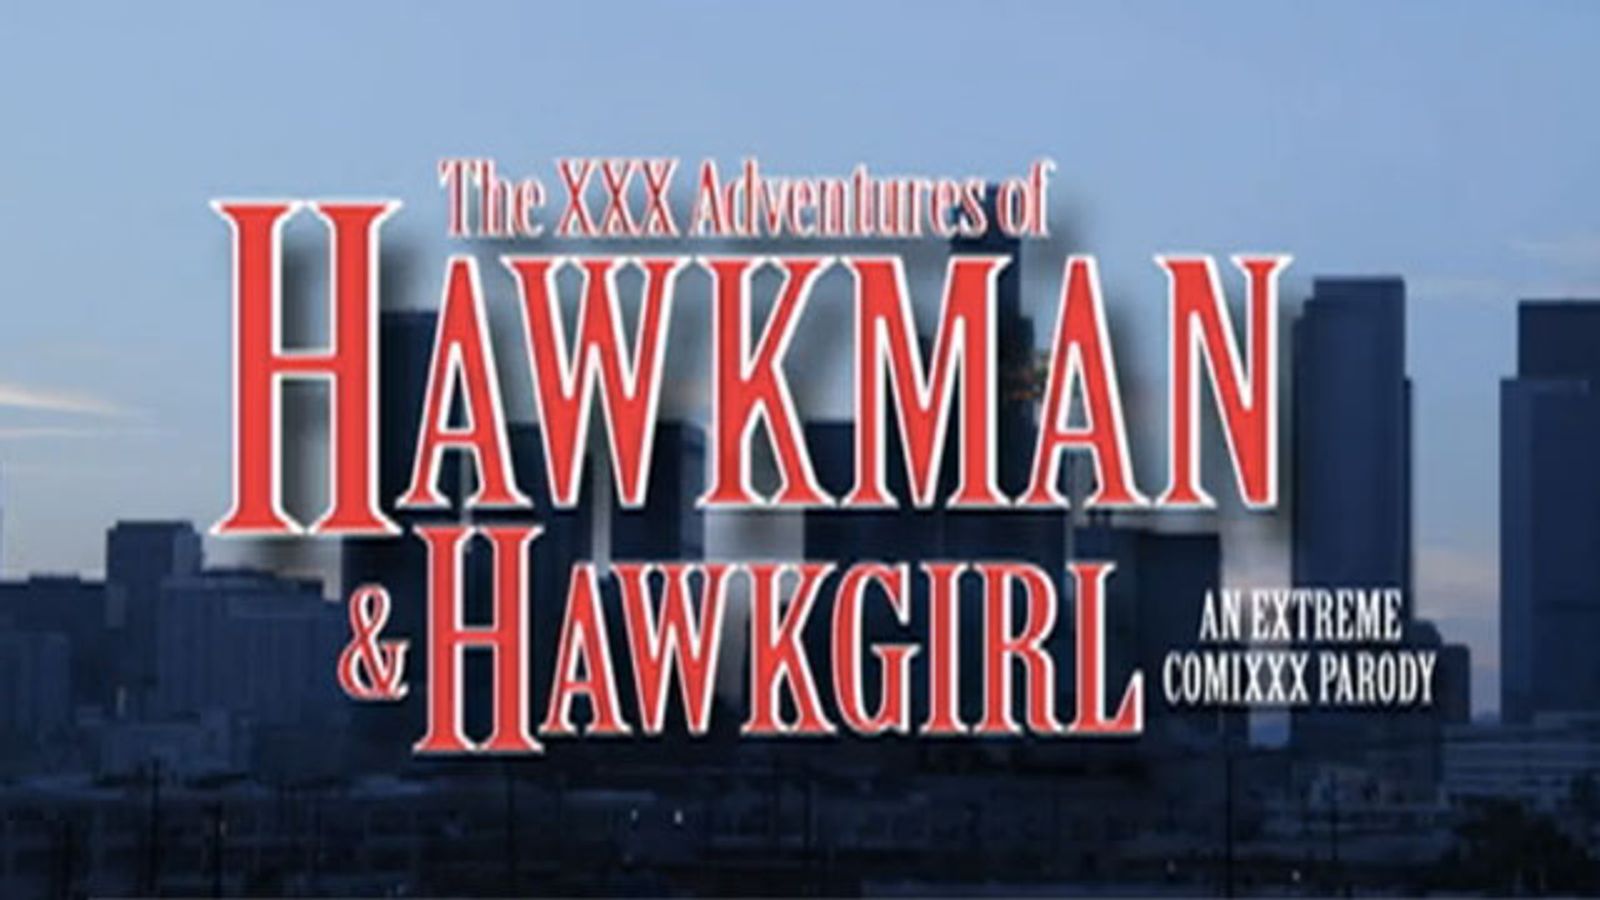 ‘XXX Adventures of Hawkman & Hawkgirl’ Teased on CraveOnline